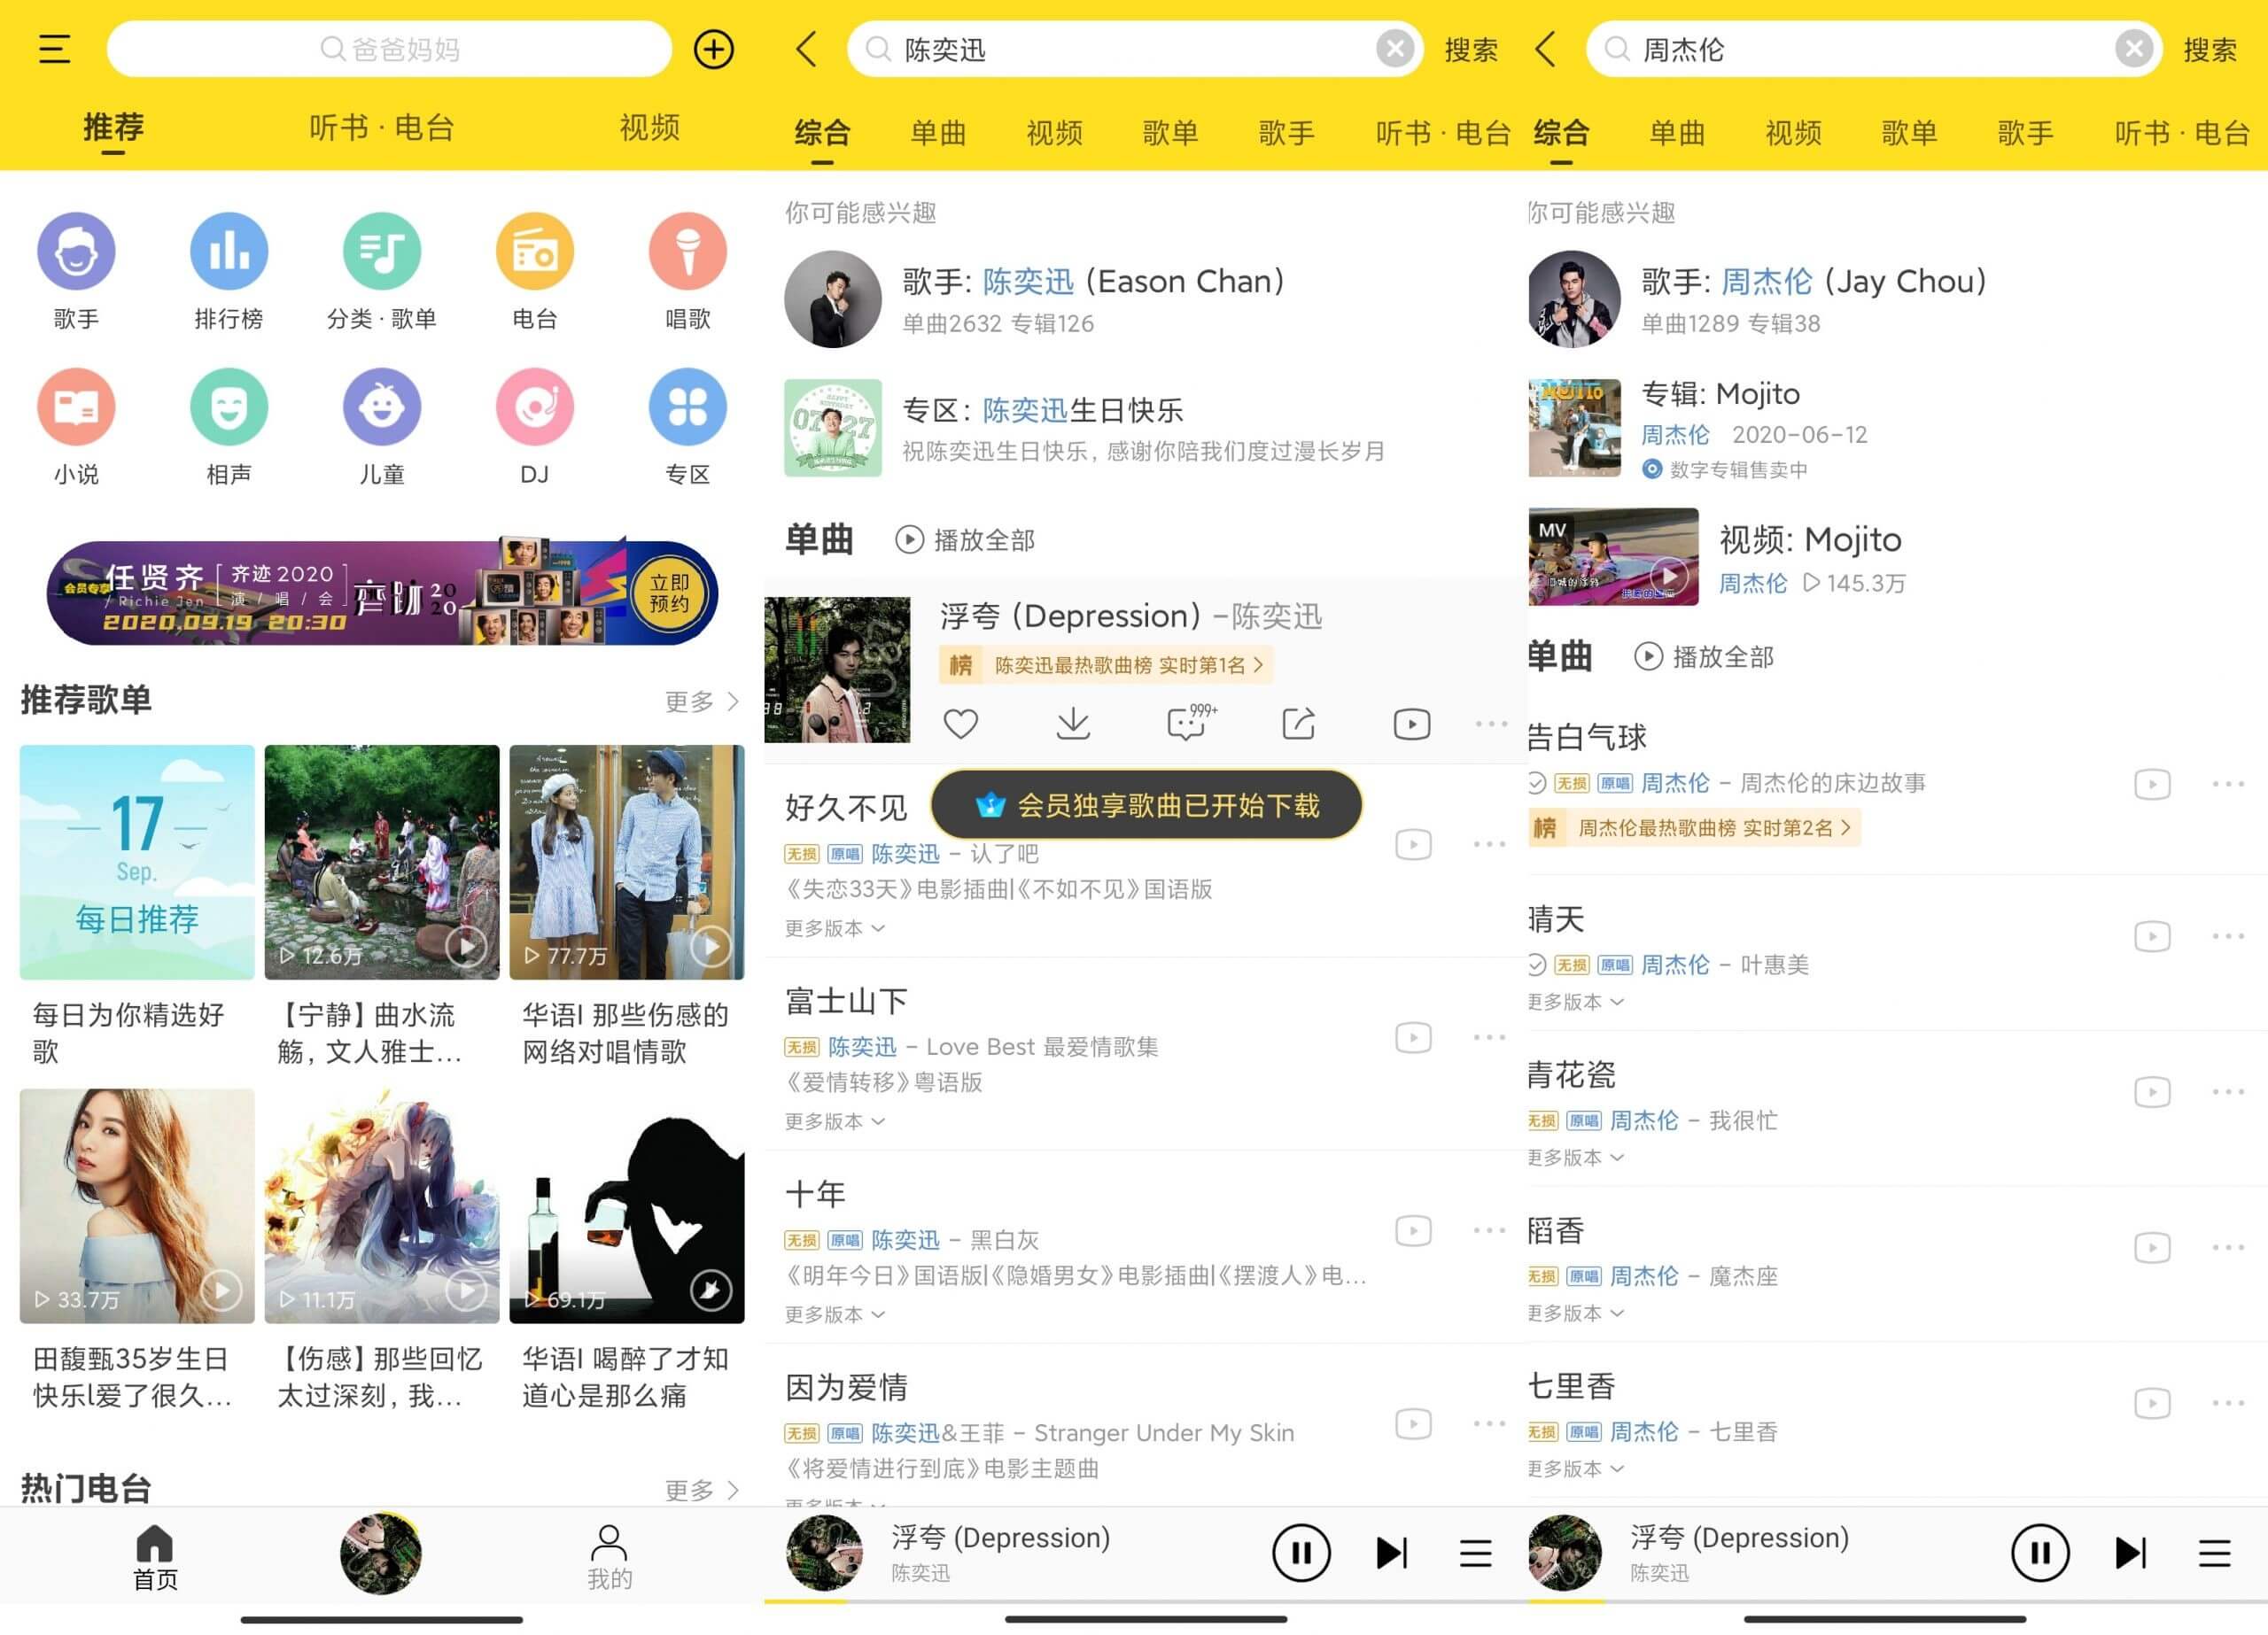 酷我音乐 for Android v9.3.4 中文高级版 免费下载无损